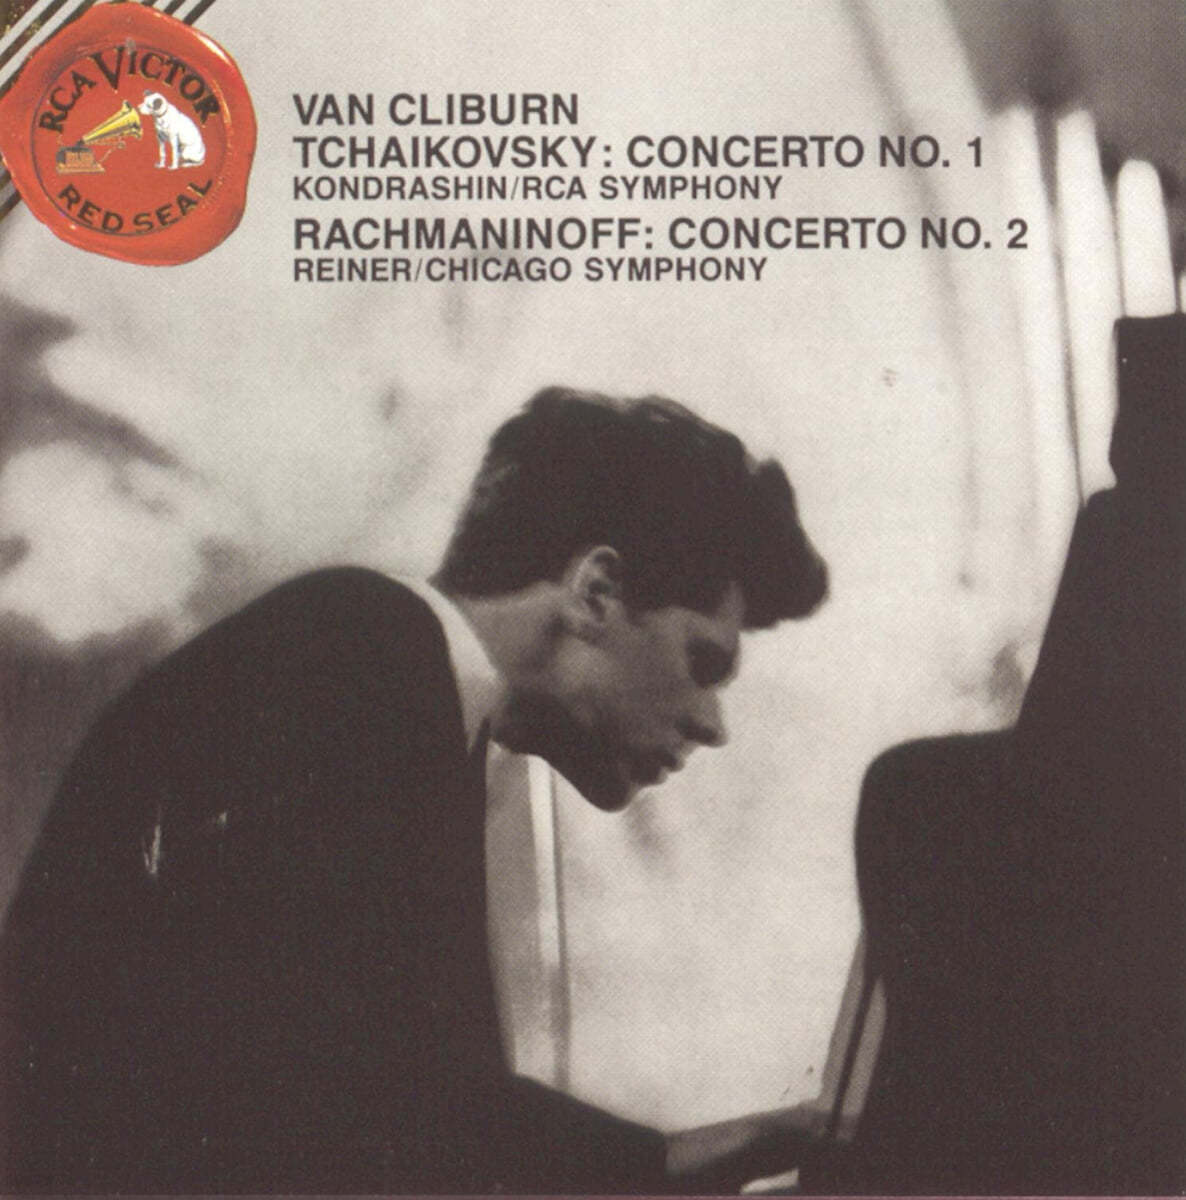 Van Cliburn / Kirill Kondrashin / Fritz Reiner 차이코프스키: 피아노 협주곡 1번 / 라흐마니노프: 피아노 협주곡 2번 - 반 클라이번 